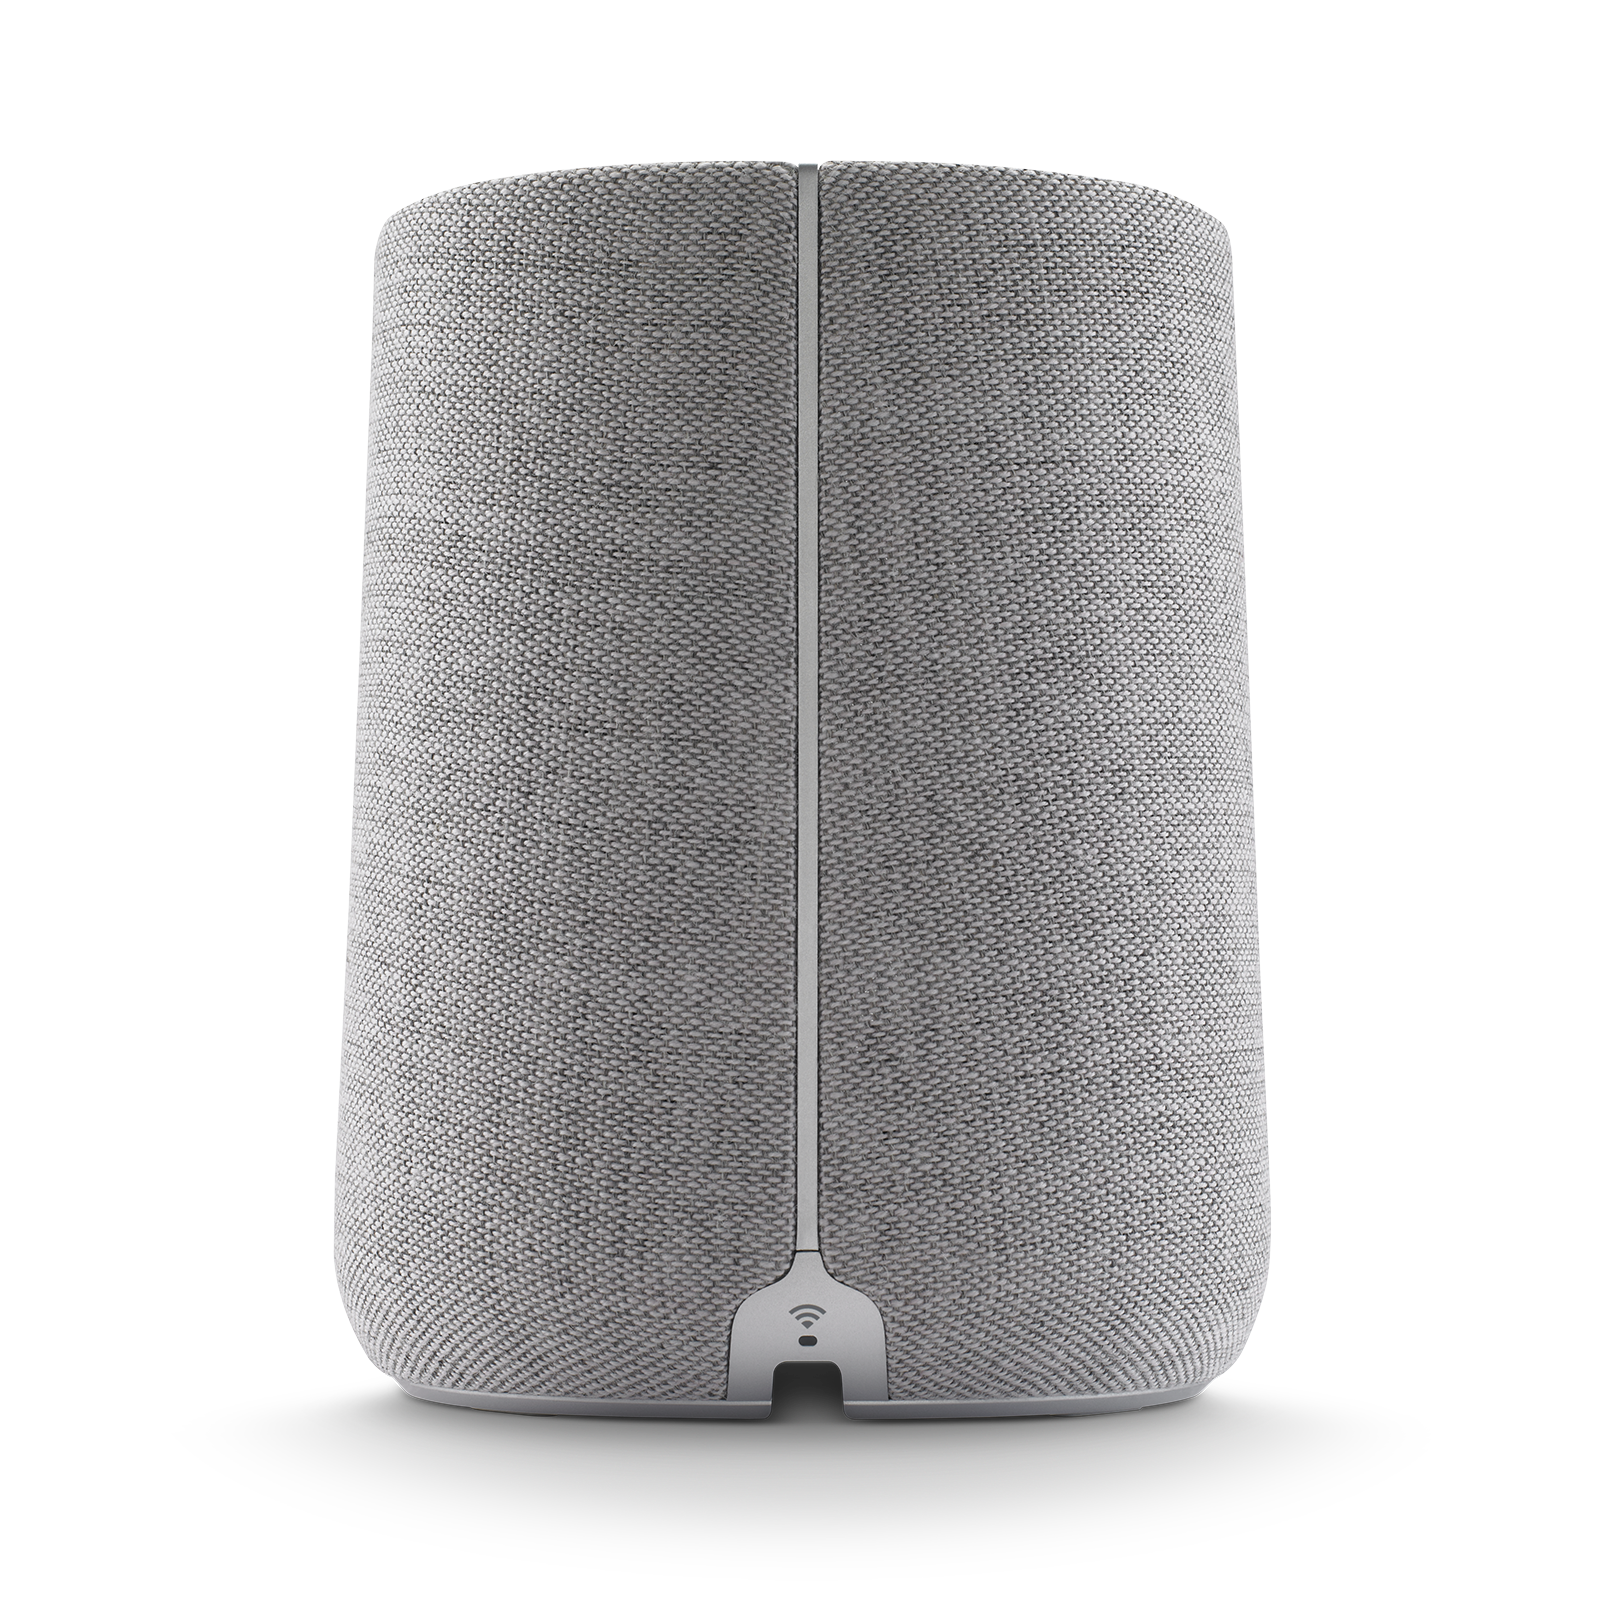 Harman Kardon Citation One MKIII - Grey - All-in-one smart speaker with room-filling sound - Back